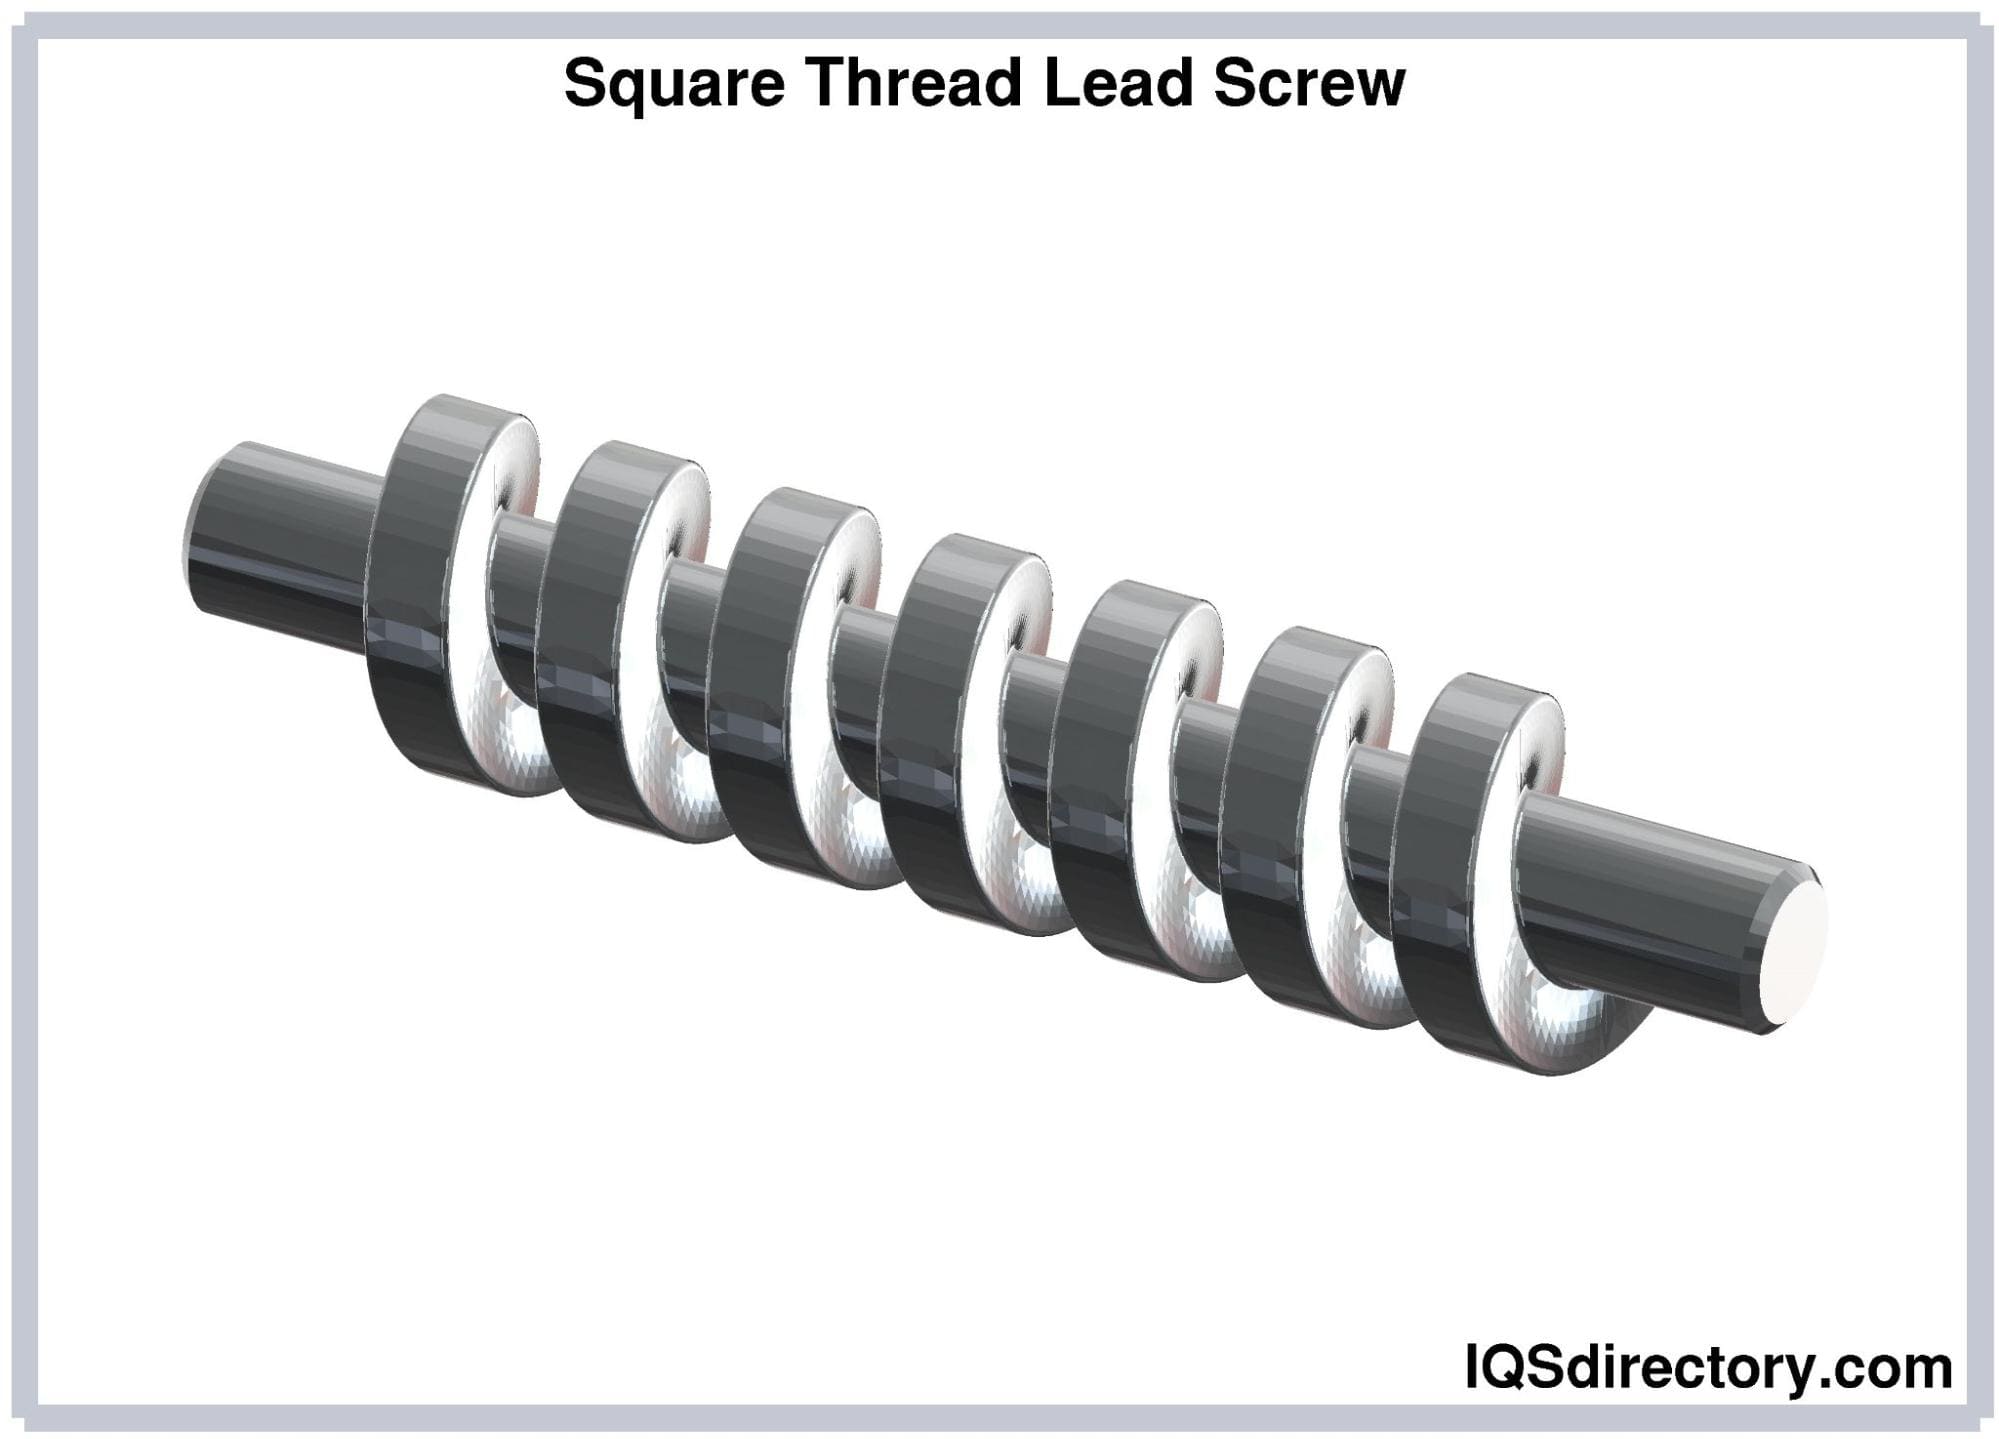 Square Thread Lead Screw